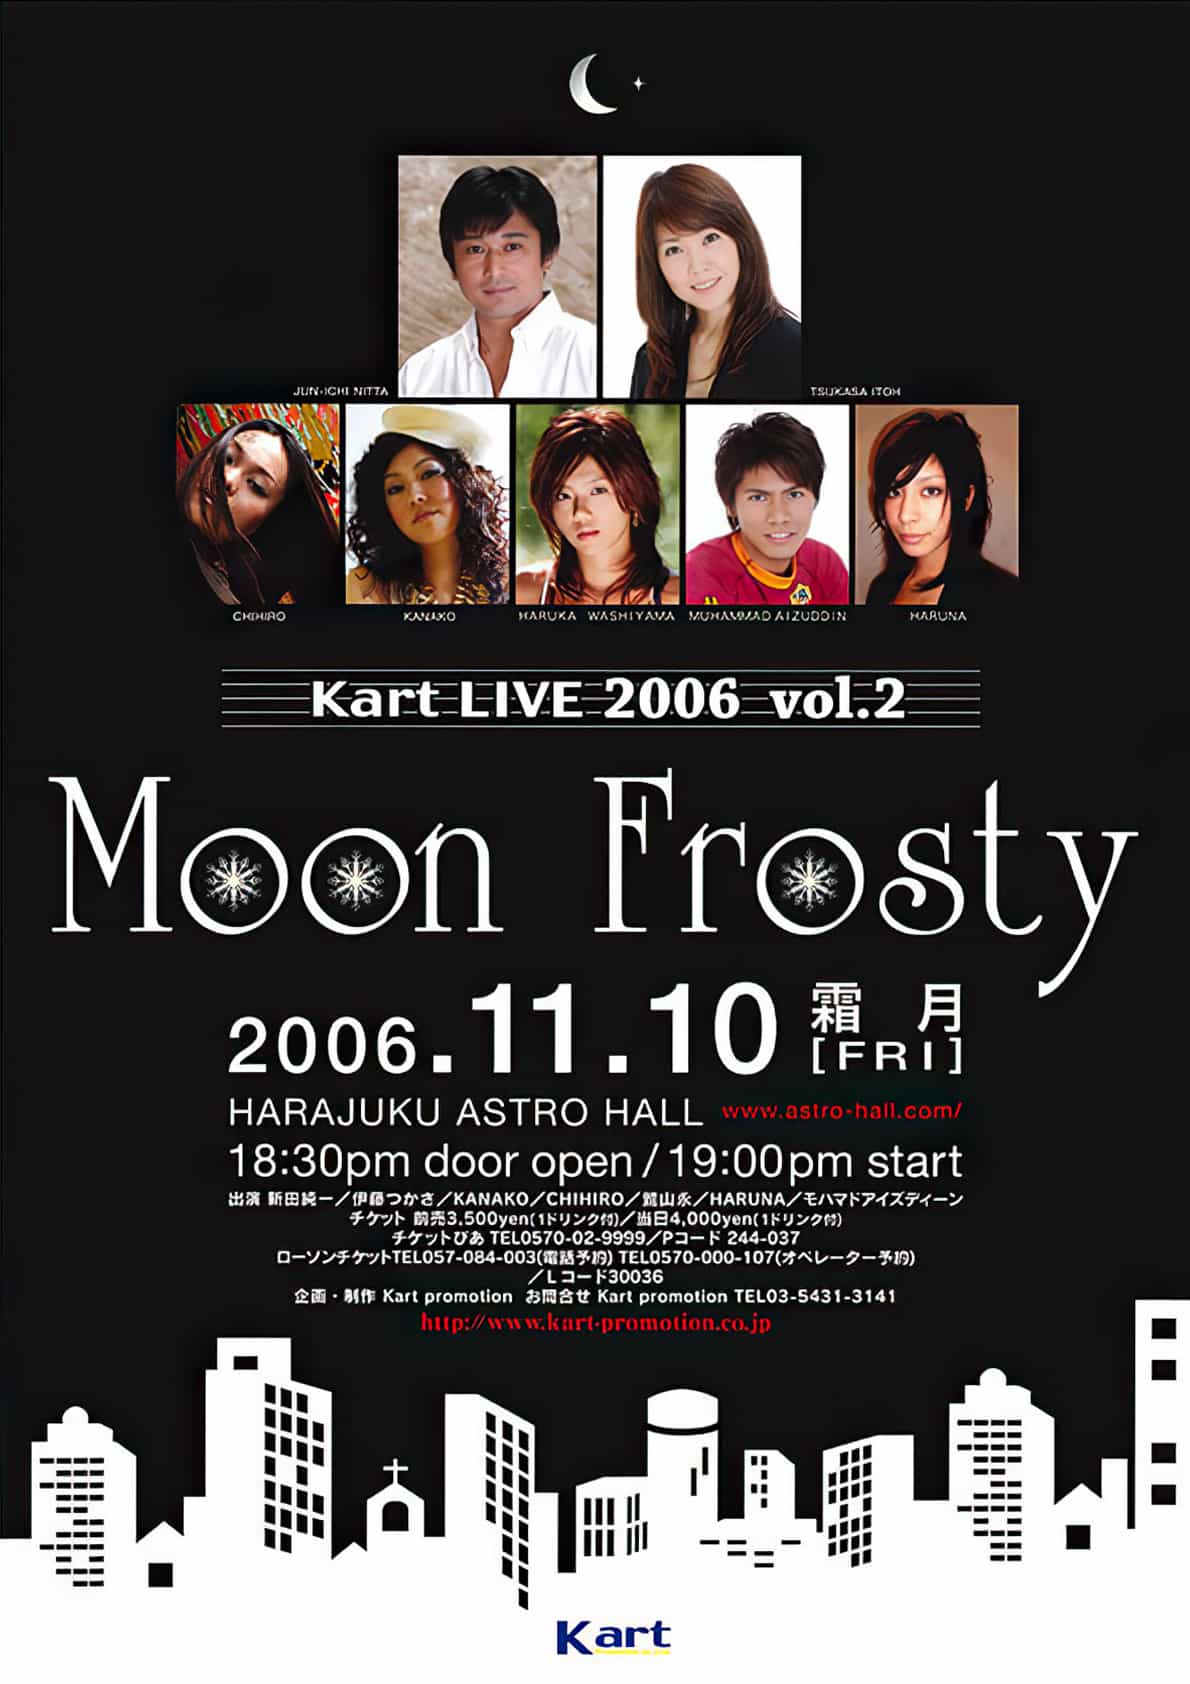 Kart LIVE 2006 Moon Frosty